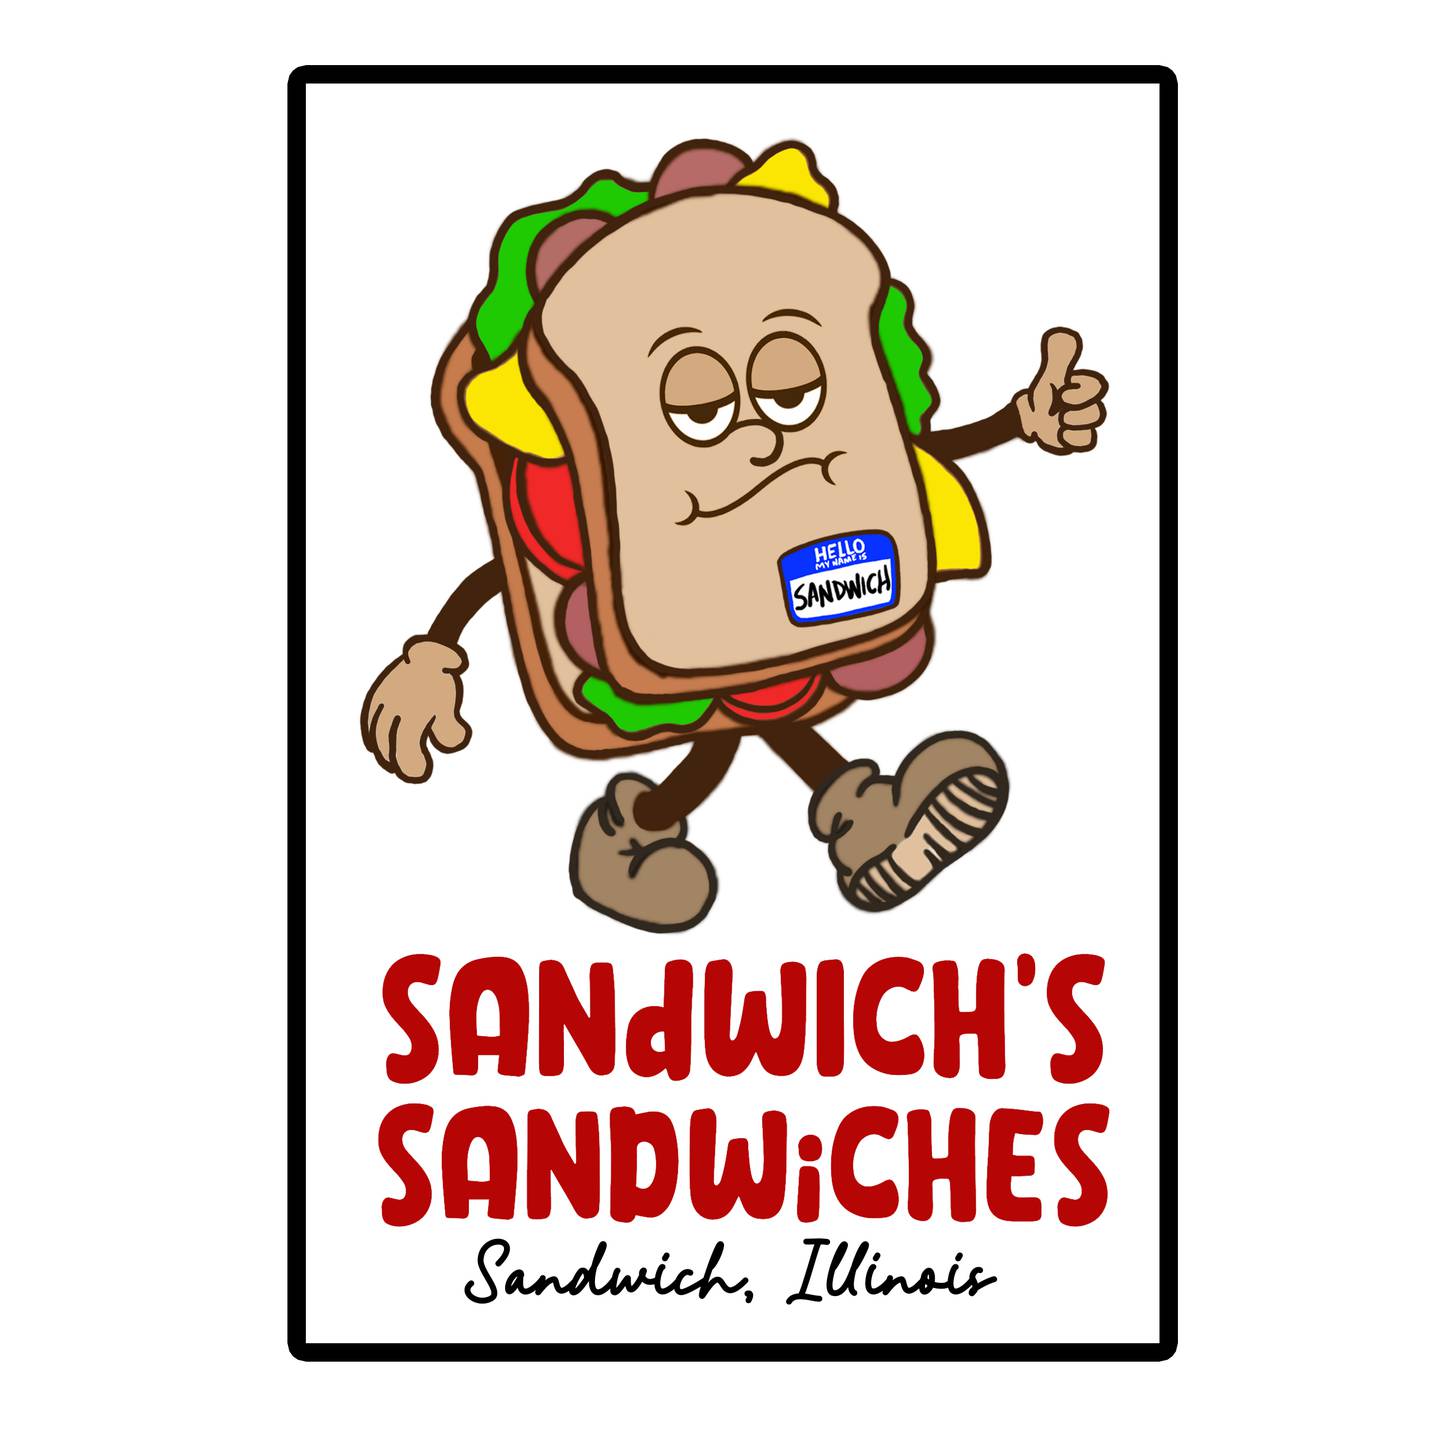 Tentative logo for Sandwich's Sandwiches, a prospective new restaurant in Sandwich. (Photo Provided)